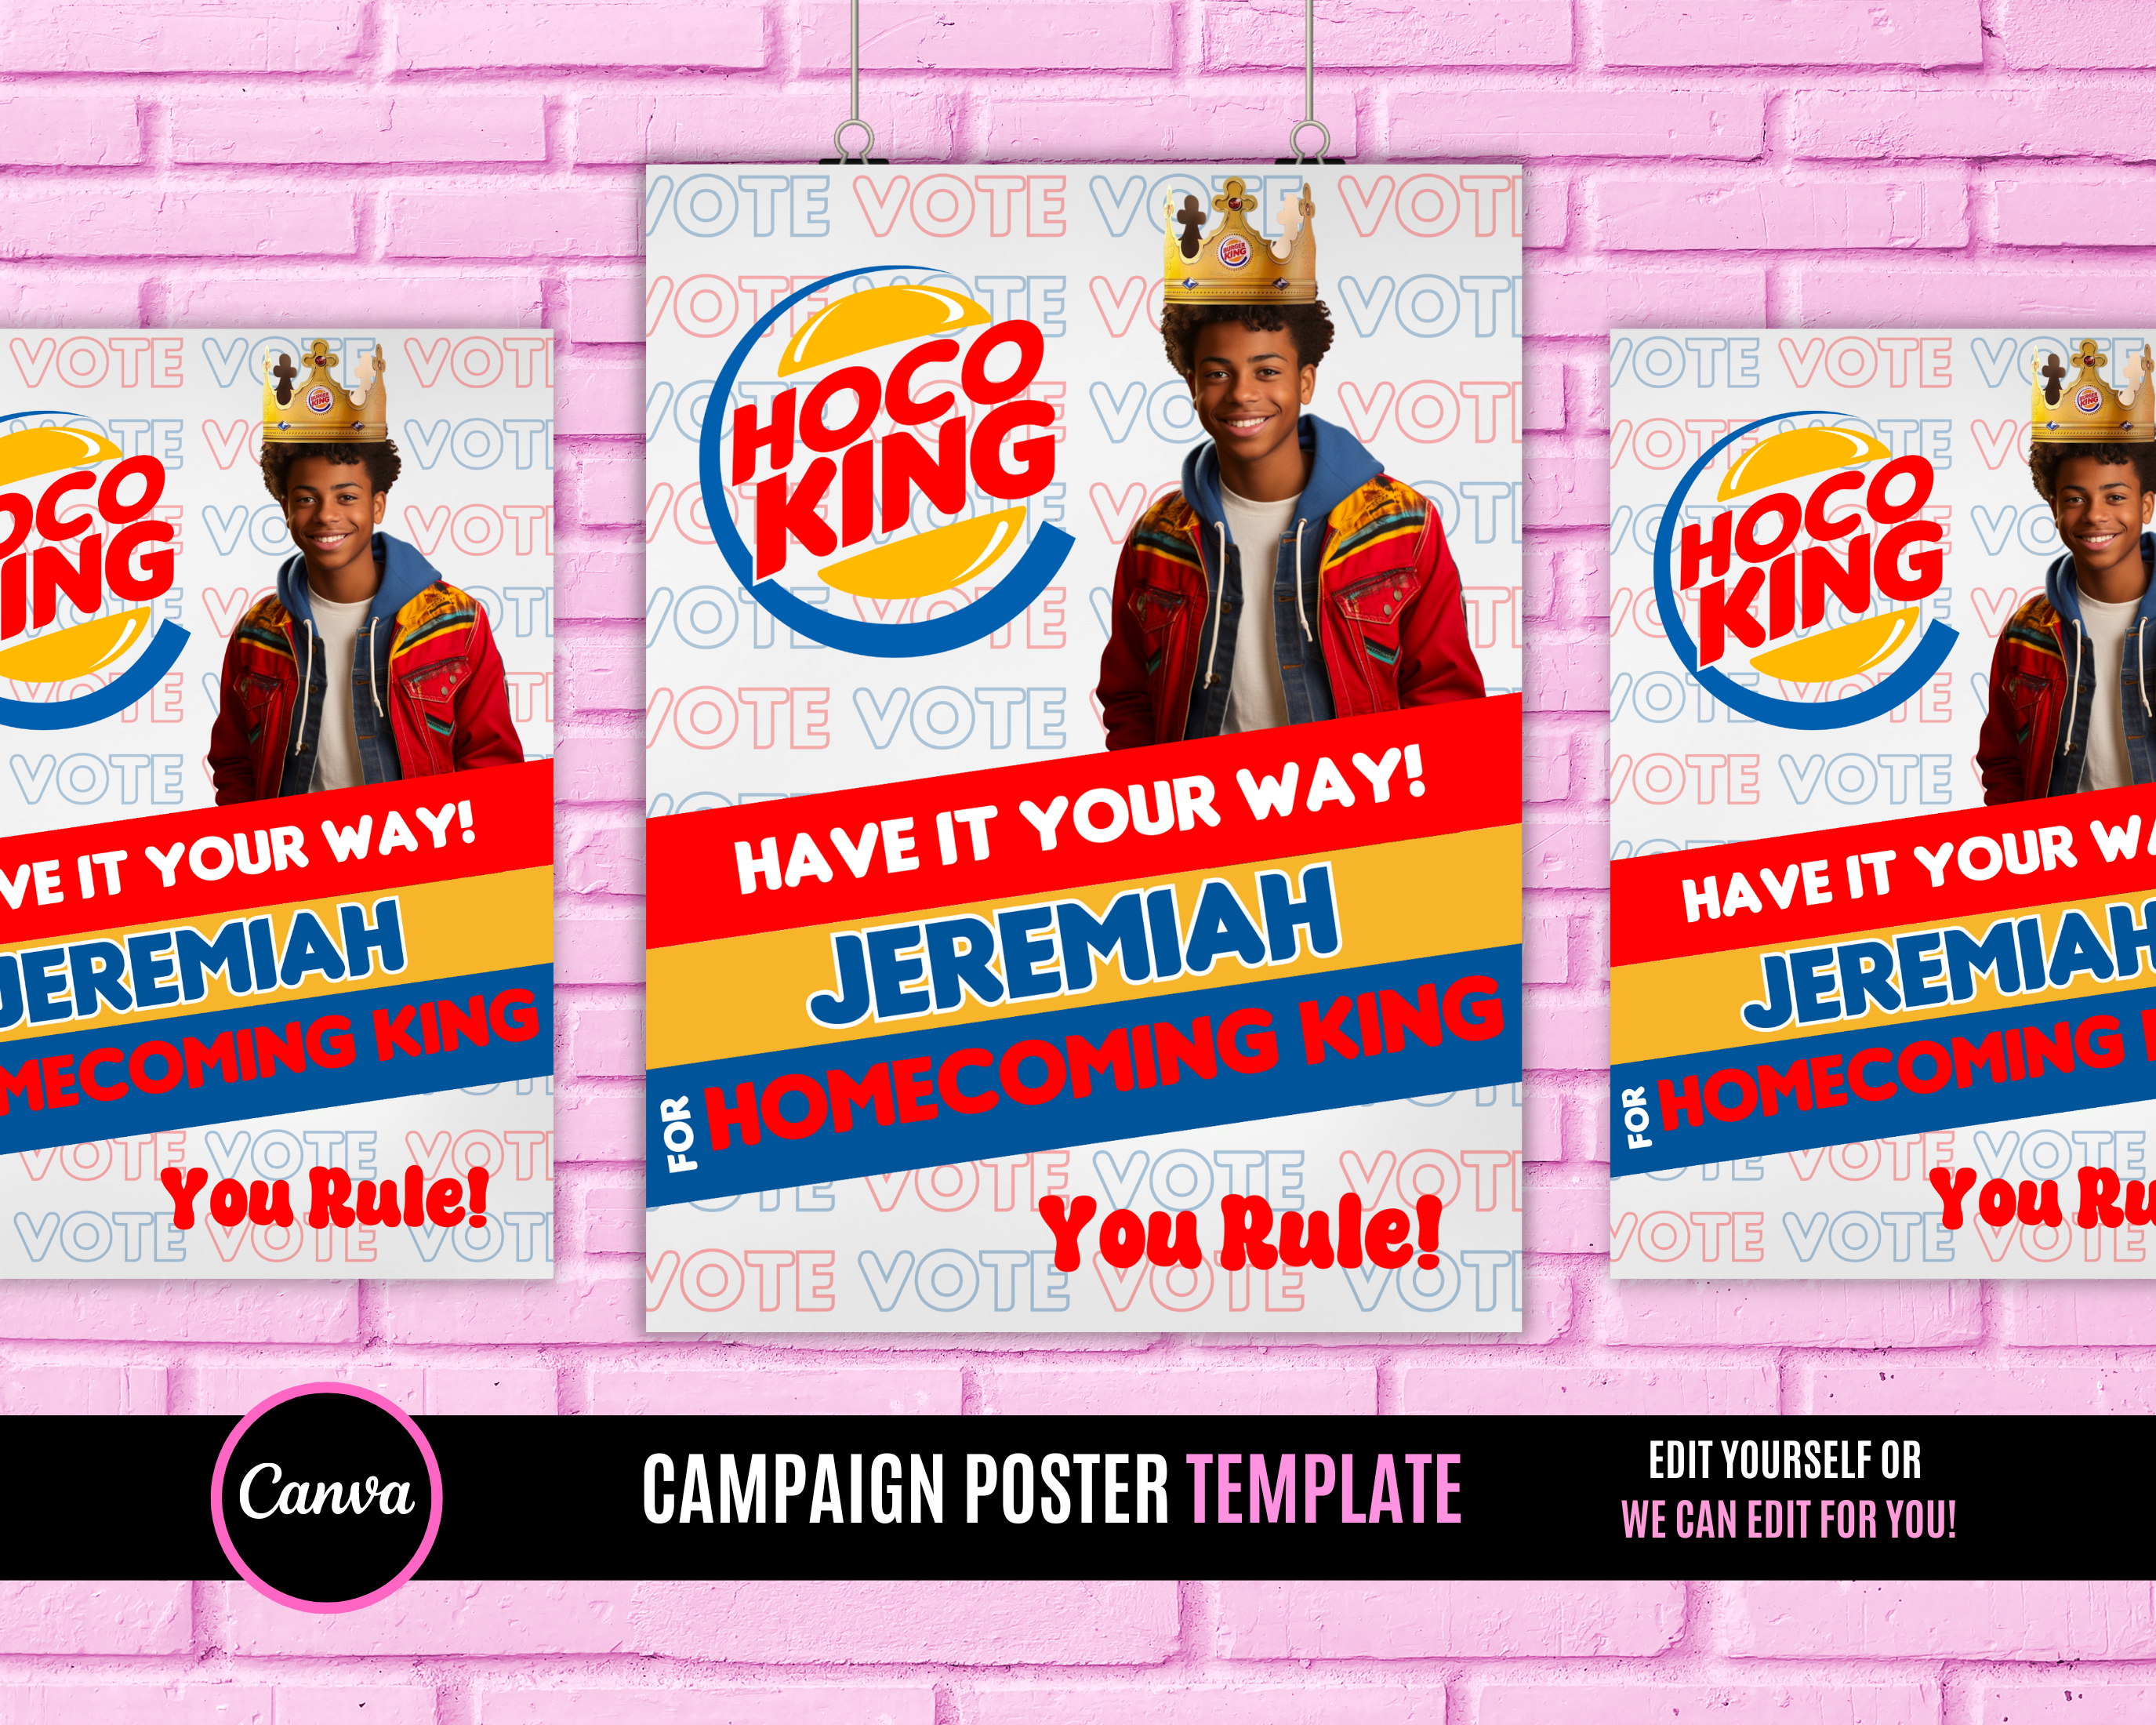 HOCO King Campaign Poster - School